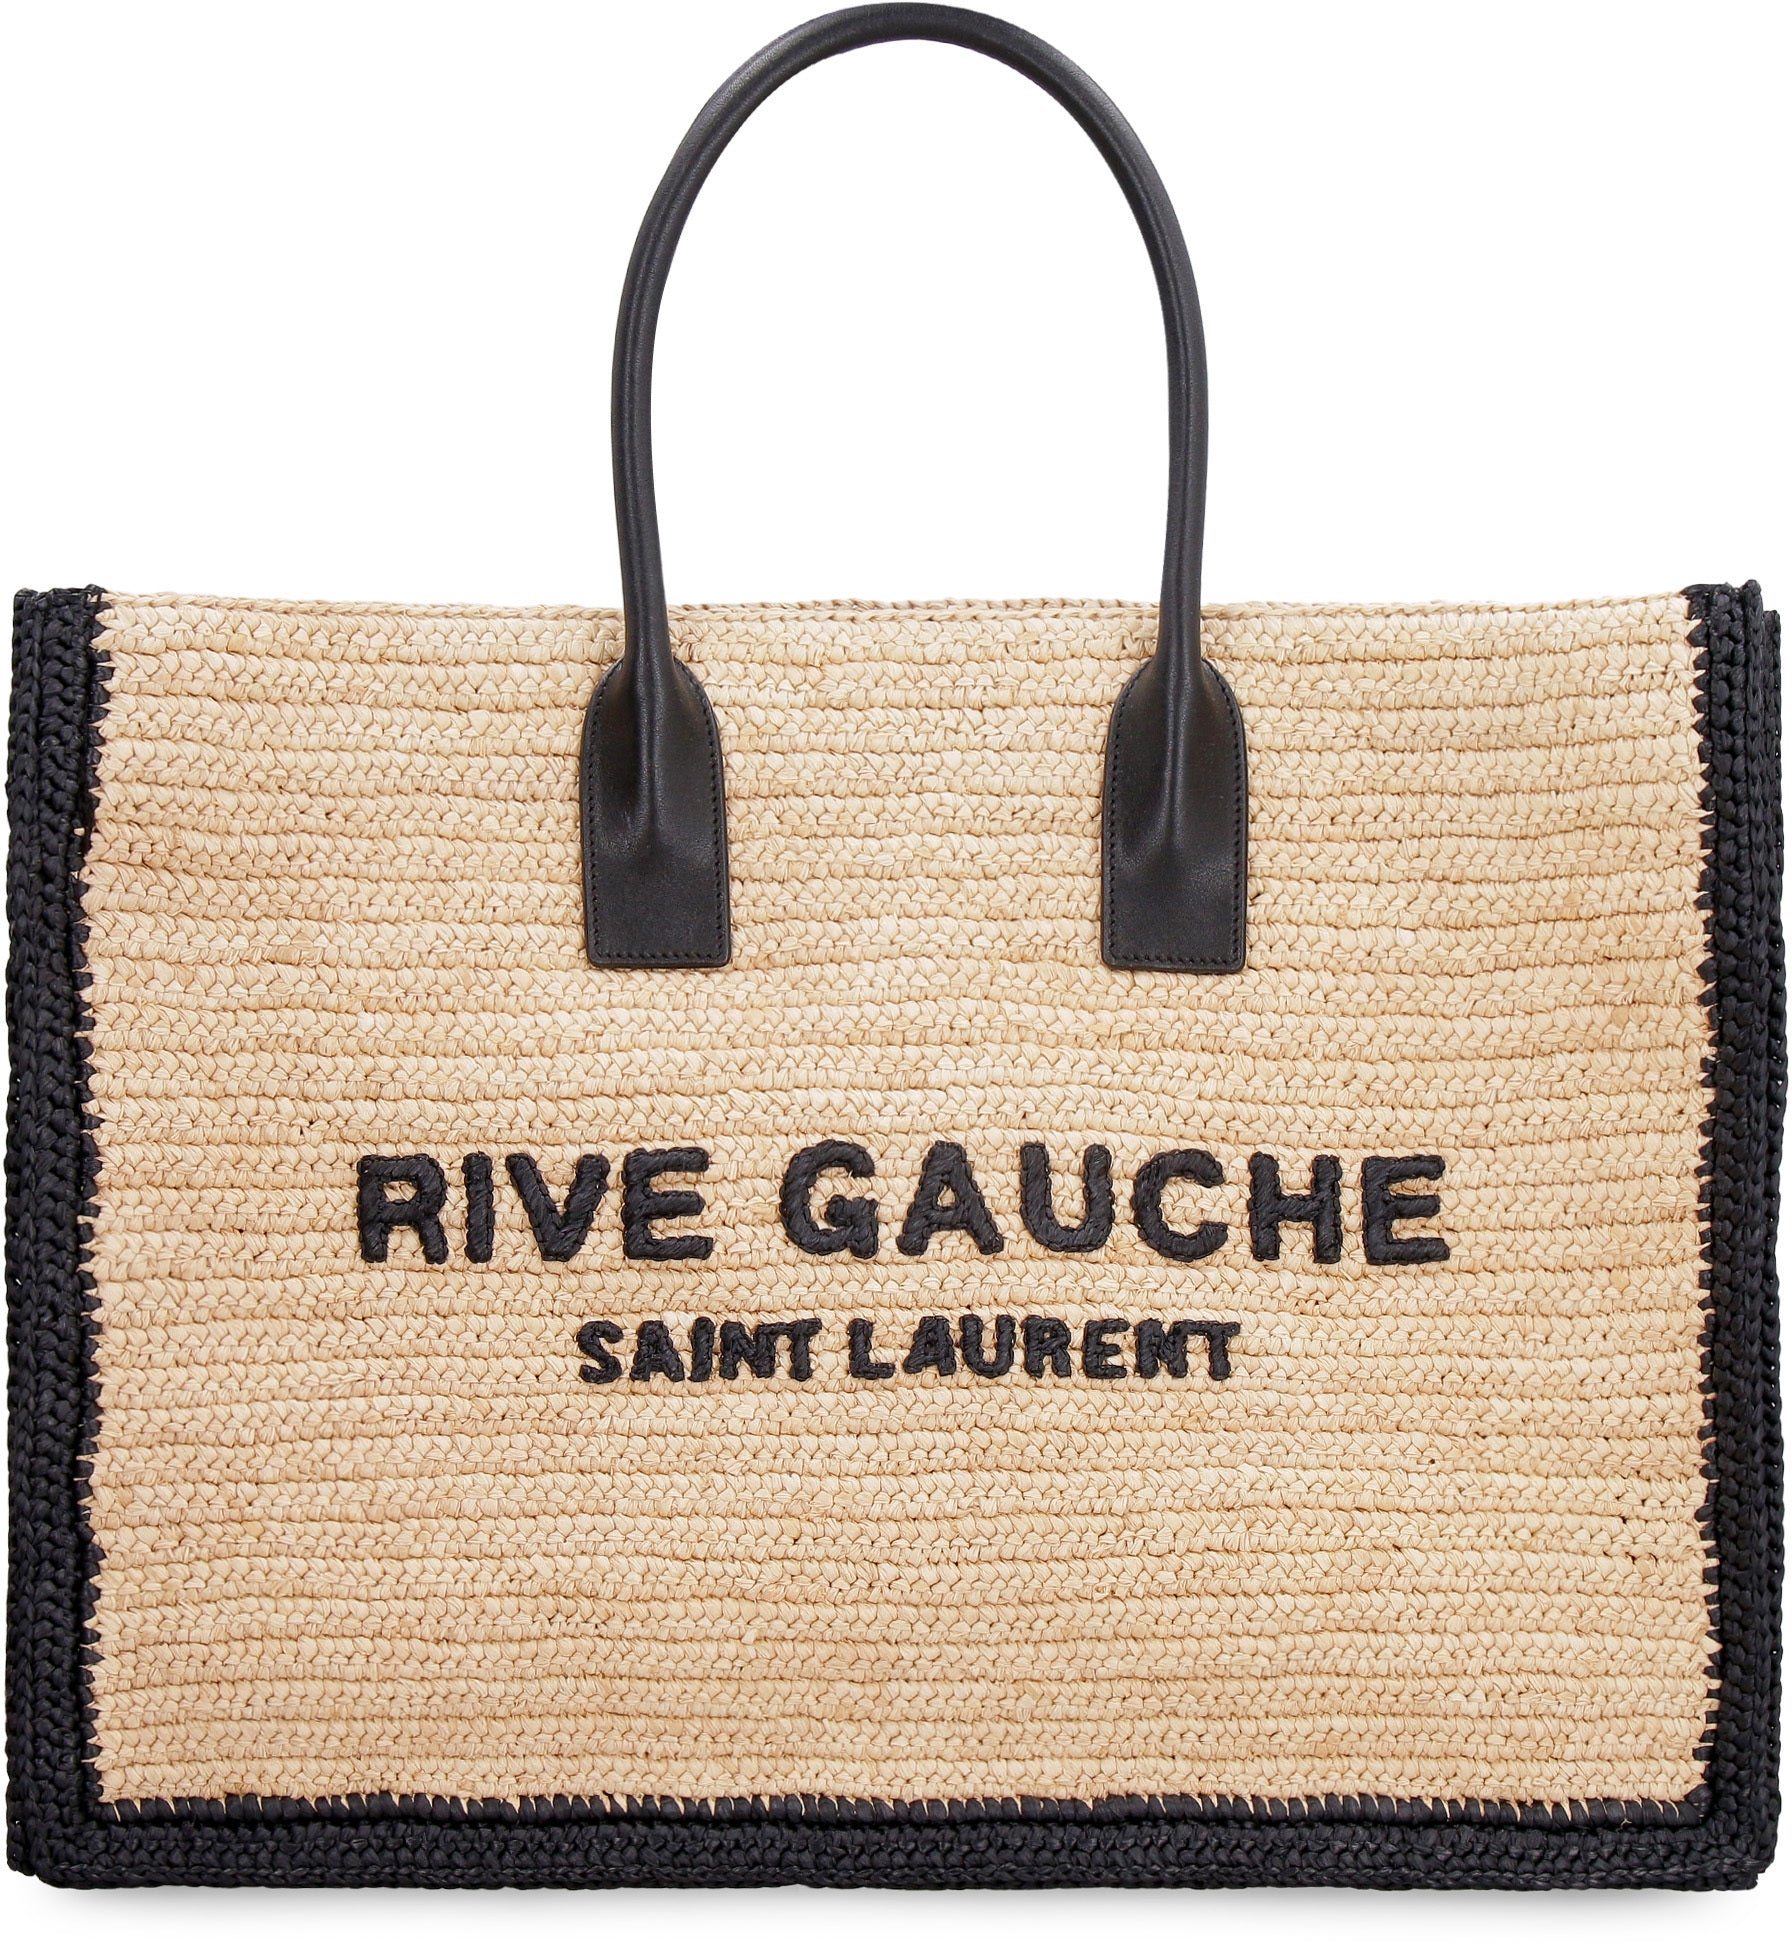 Rive Gauche Canvas Tote Bag in Green - Saint Laurent